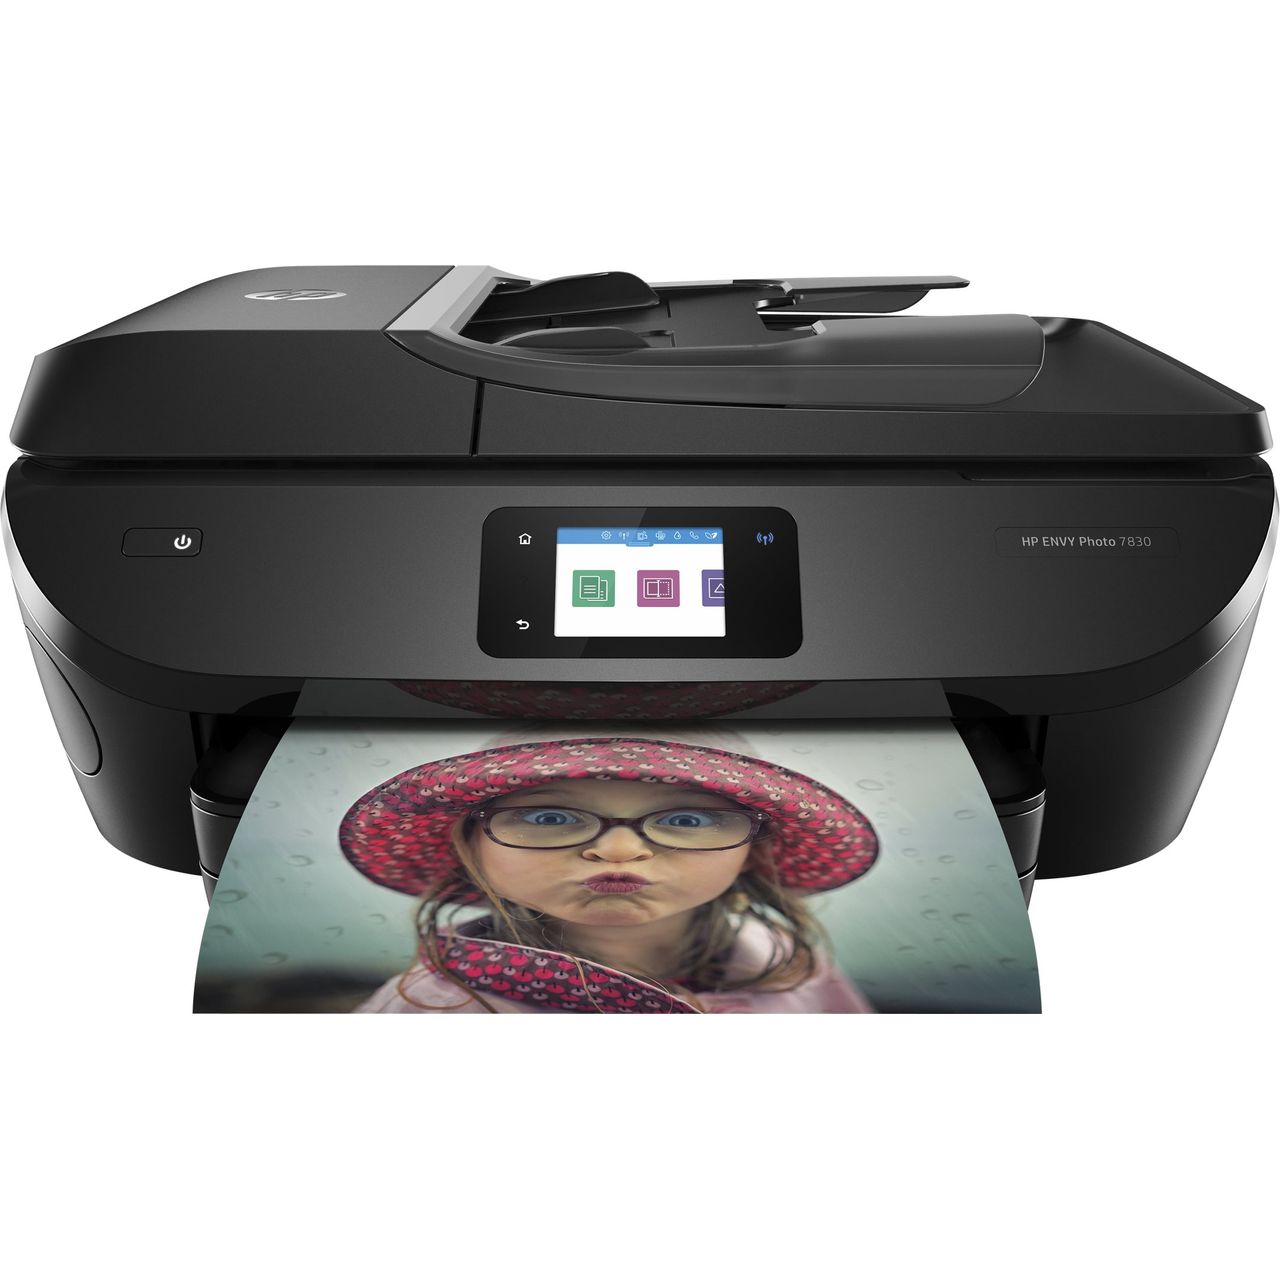 HP Envy Photo 7830 Inkjet Printer Review